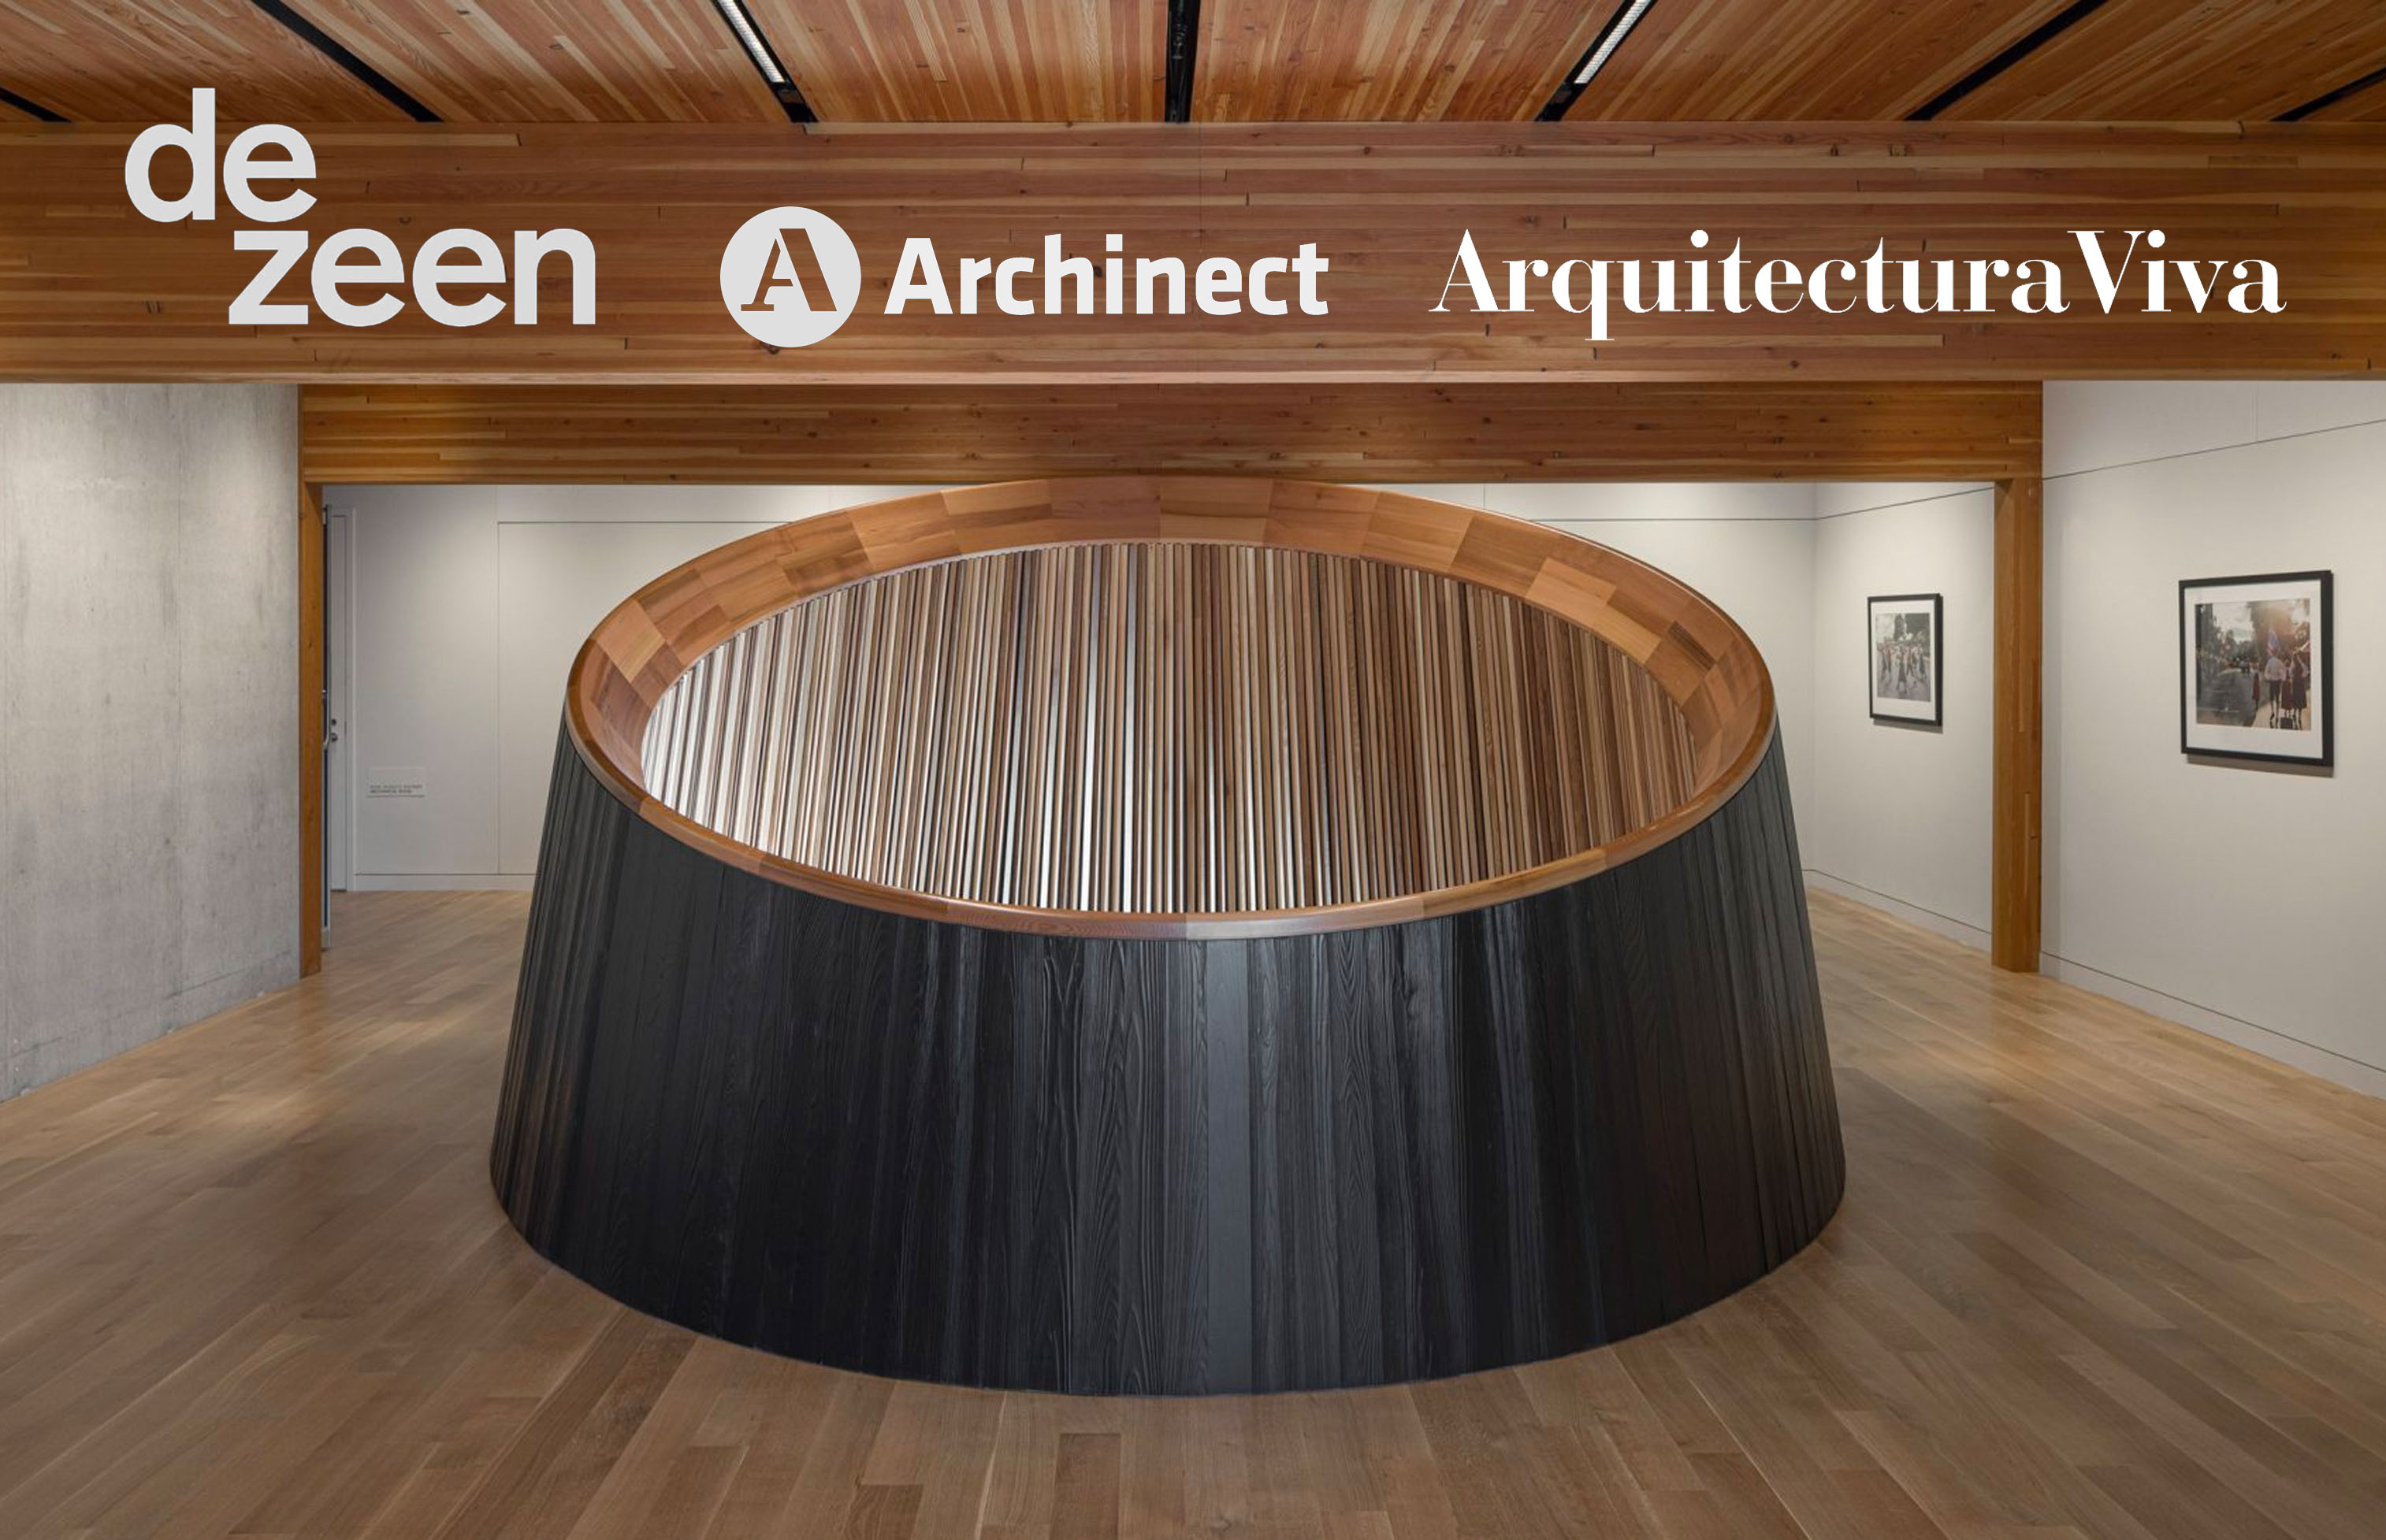 Vesterheim Commons featured in Dezeen, Arquitectura Viva, Archinect among others